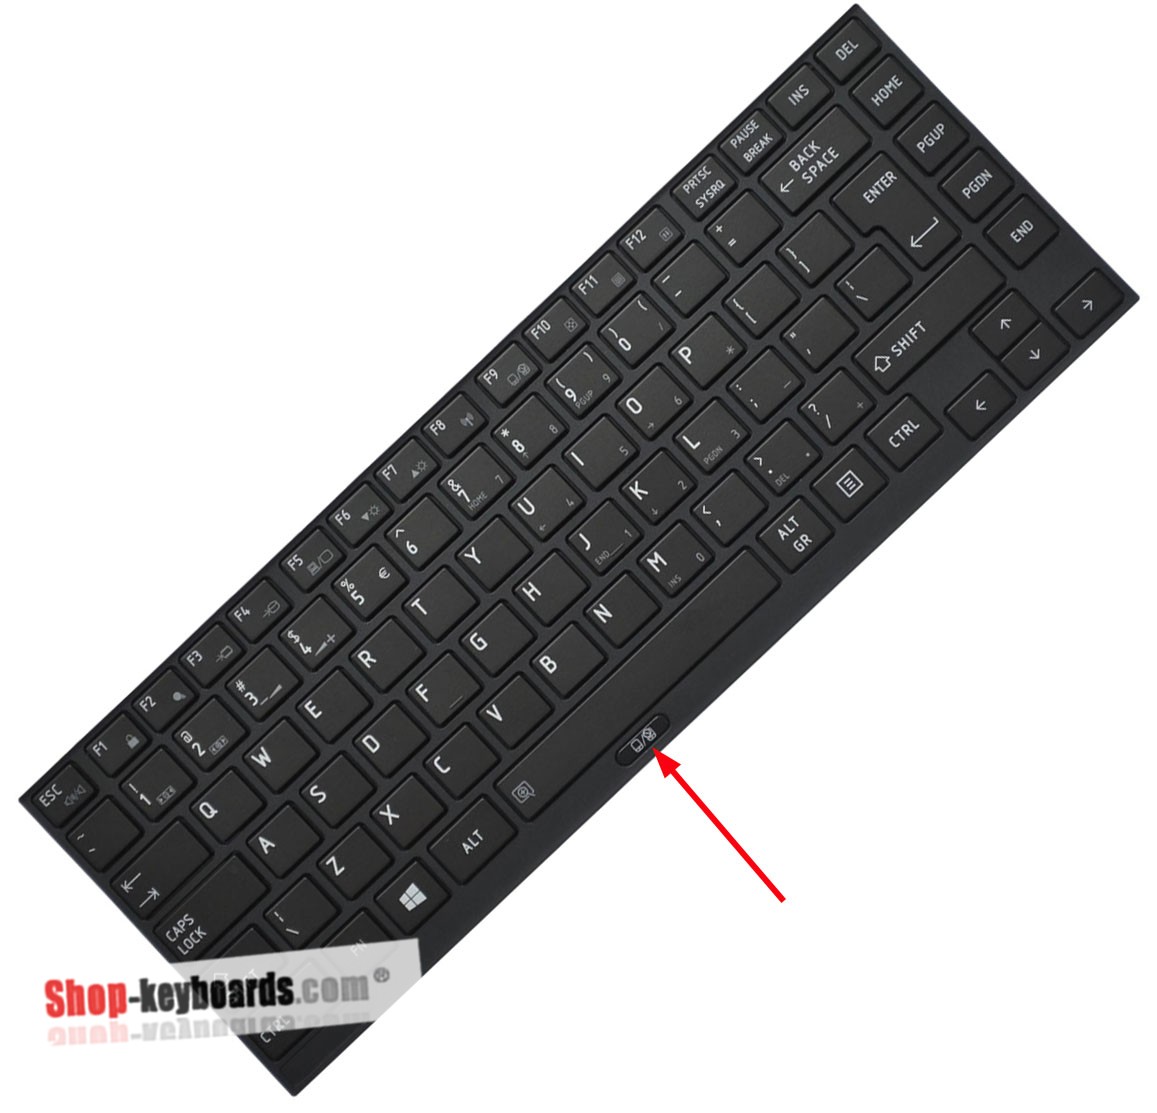 Toshiba Portege R830-S8310  Keyboard replacement